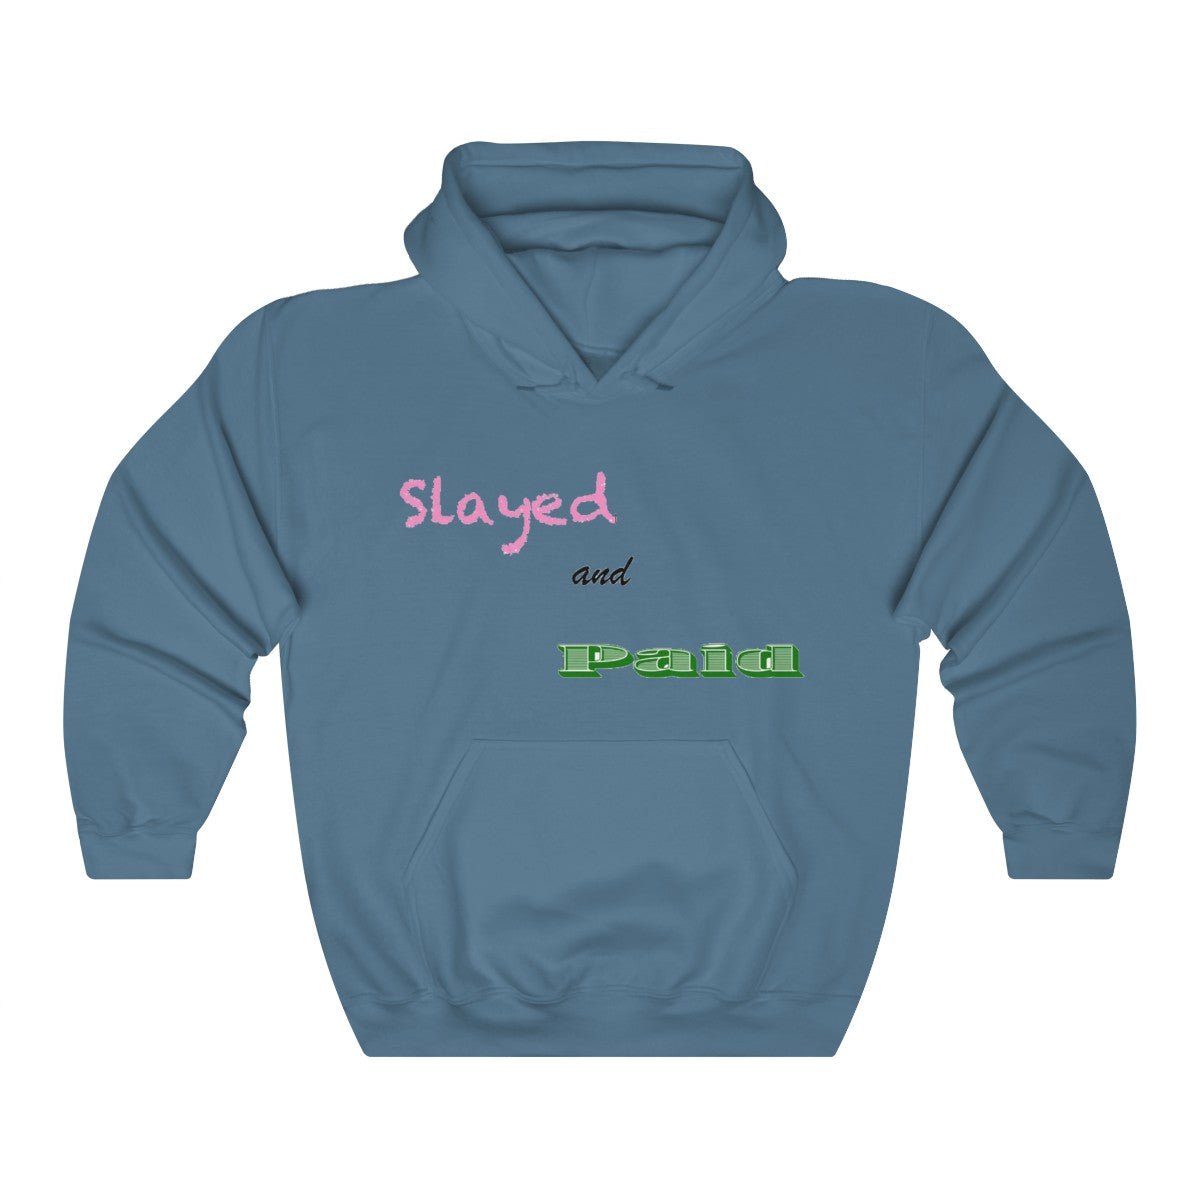 Slayed and Paid Hooded Sweatshirt - Slayed by Meme